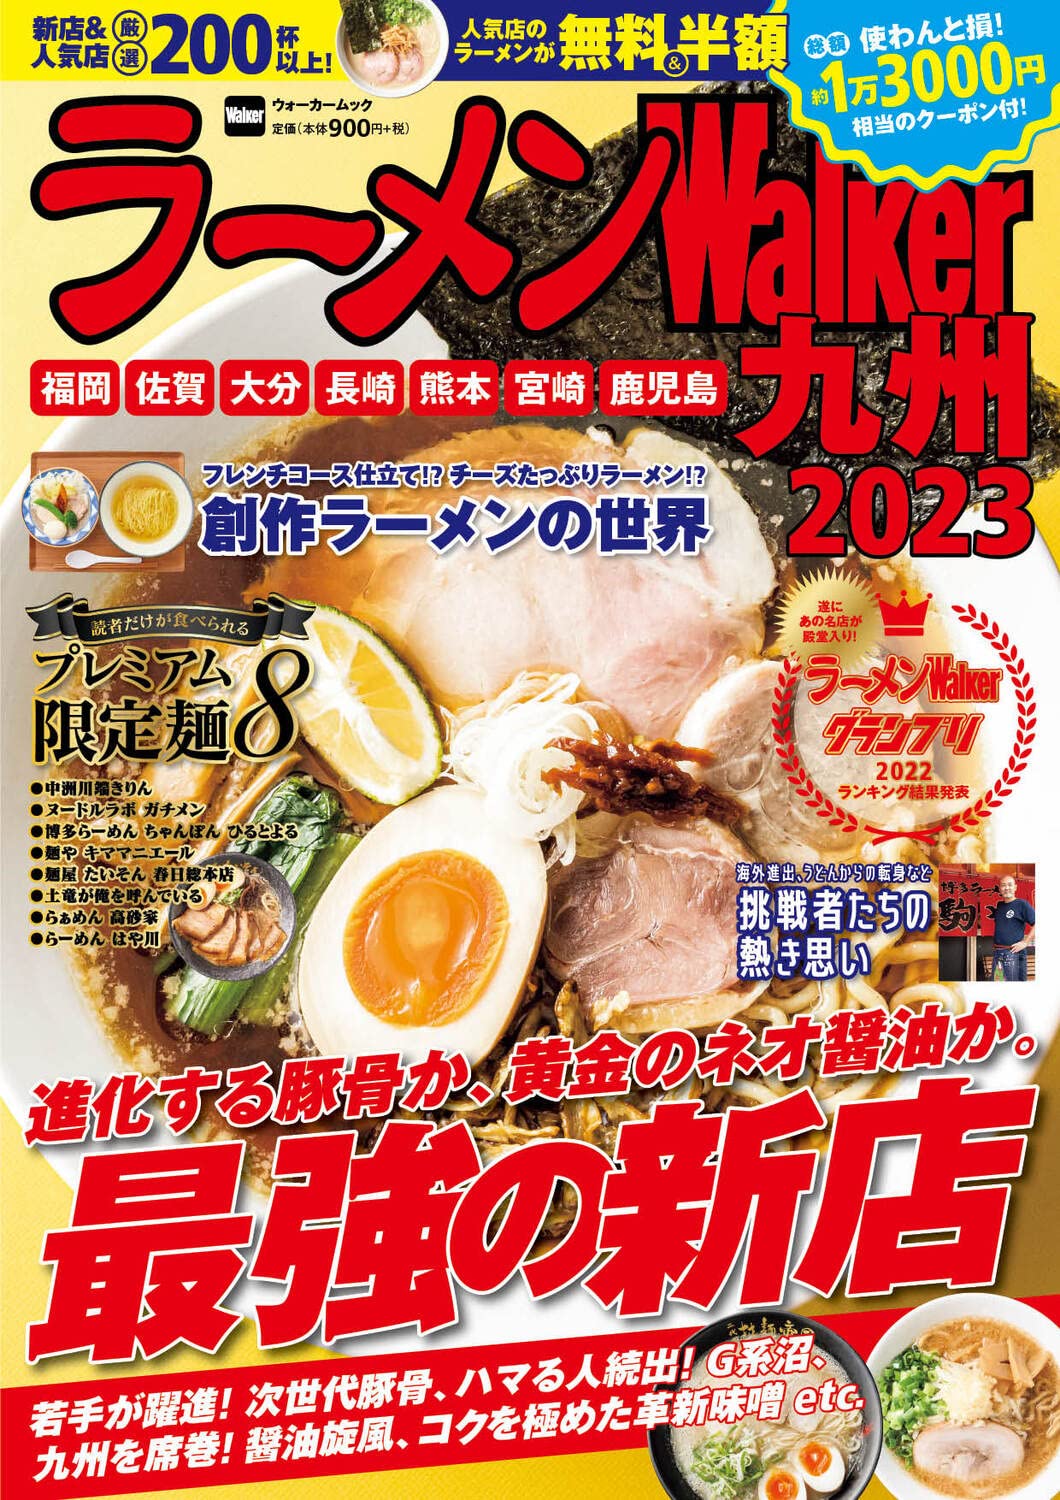 Ramen Walker Kyushu Edition 2023